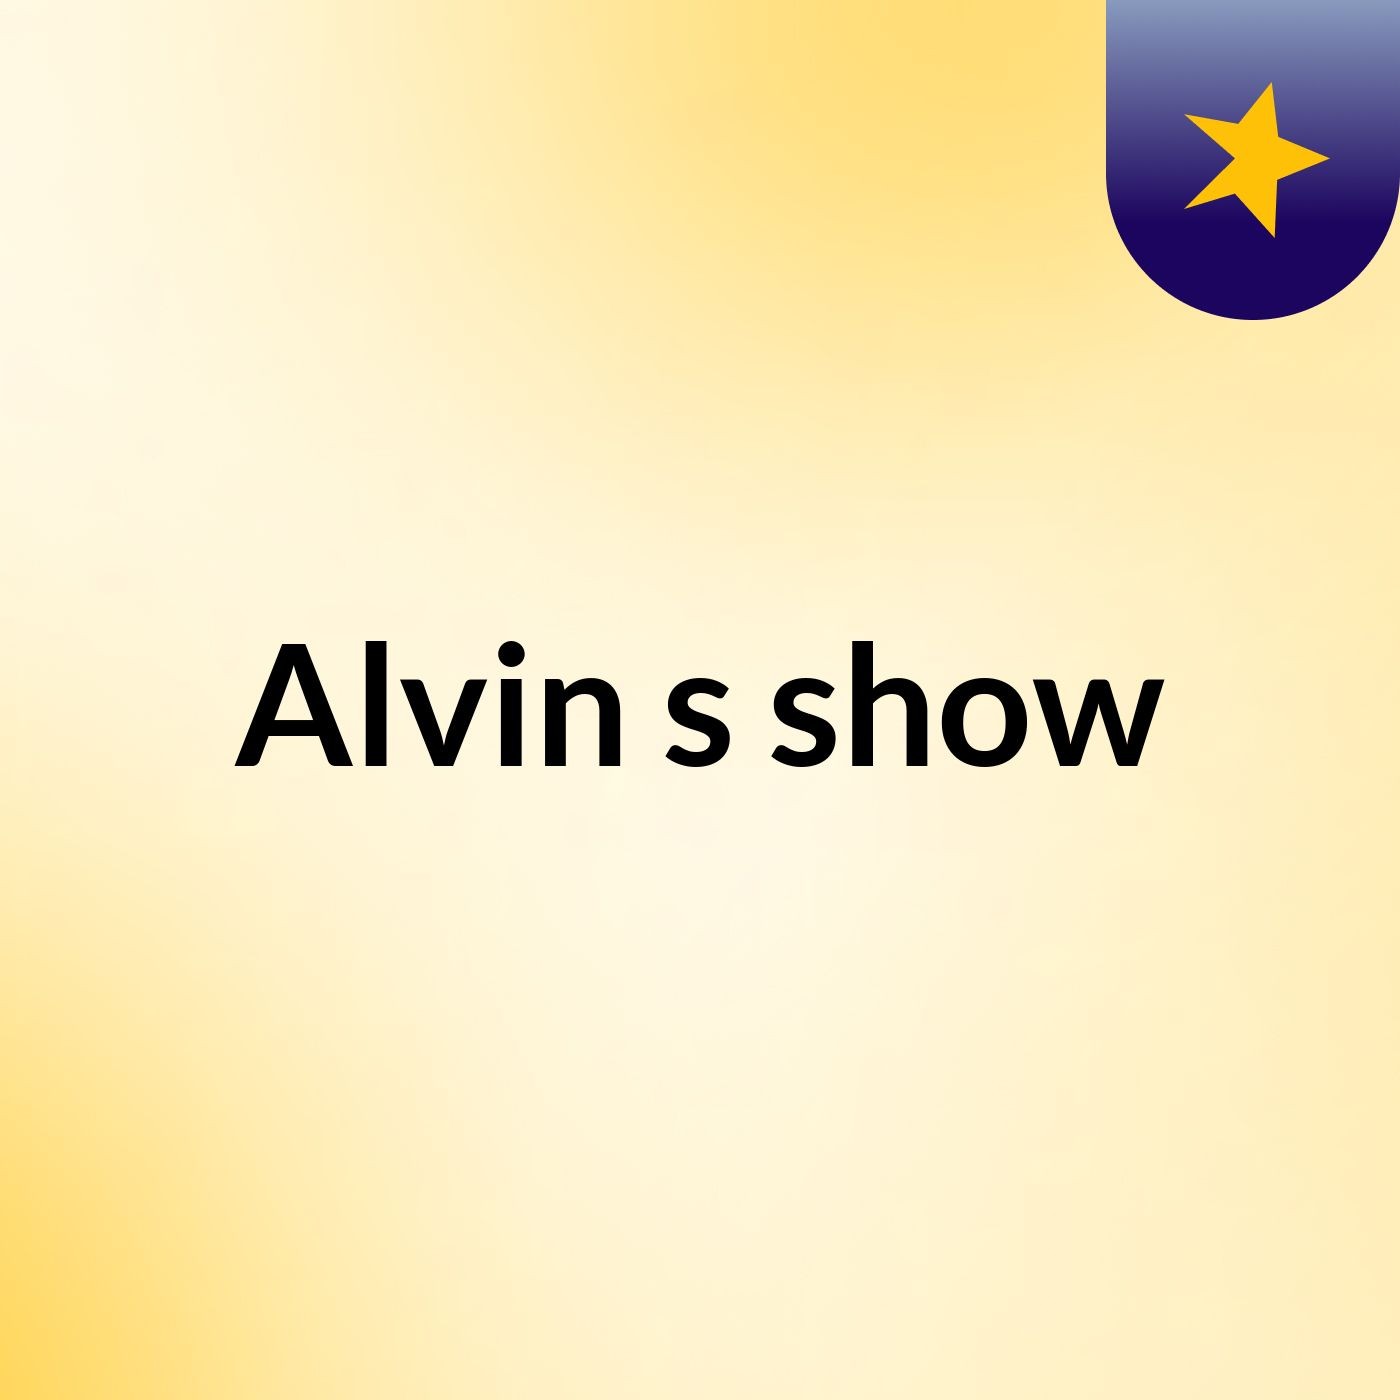 Alvin's show